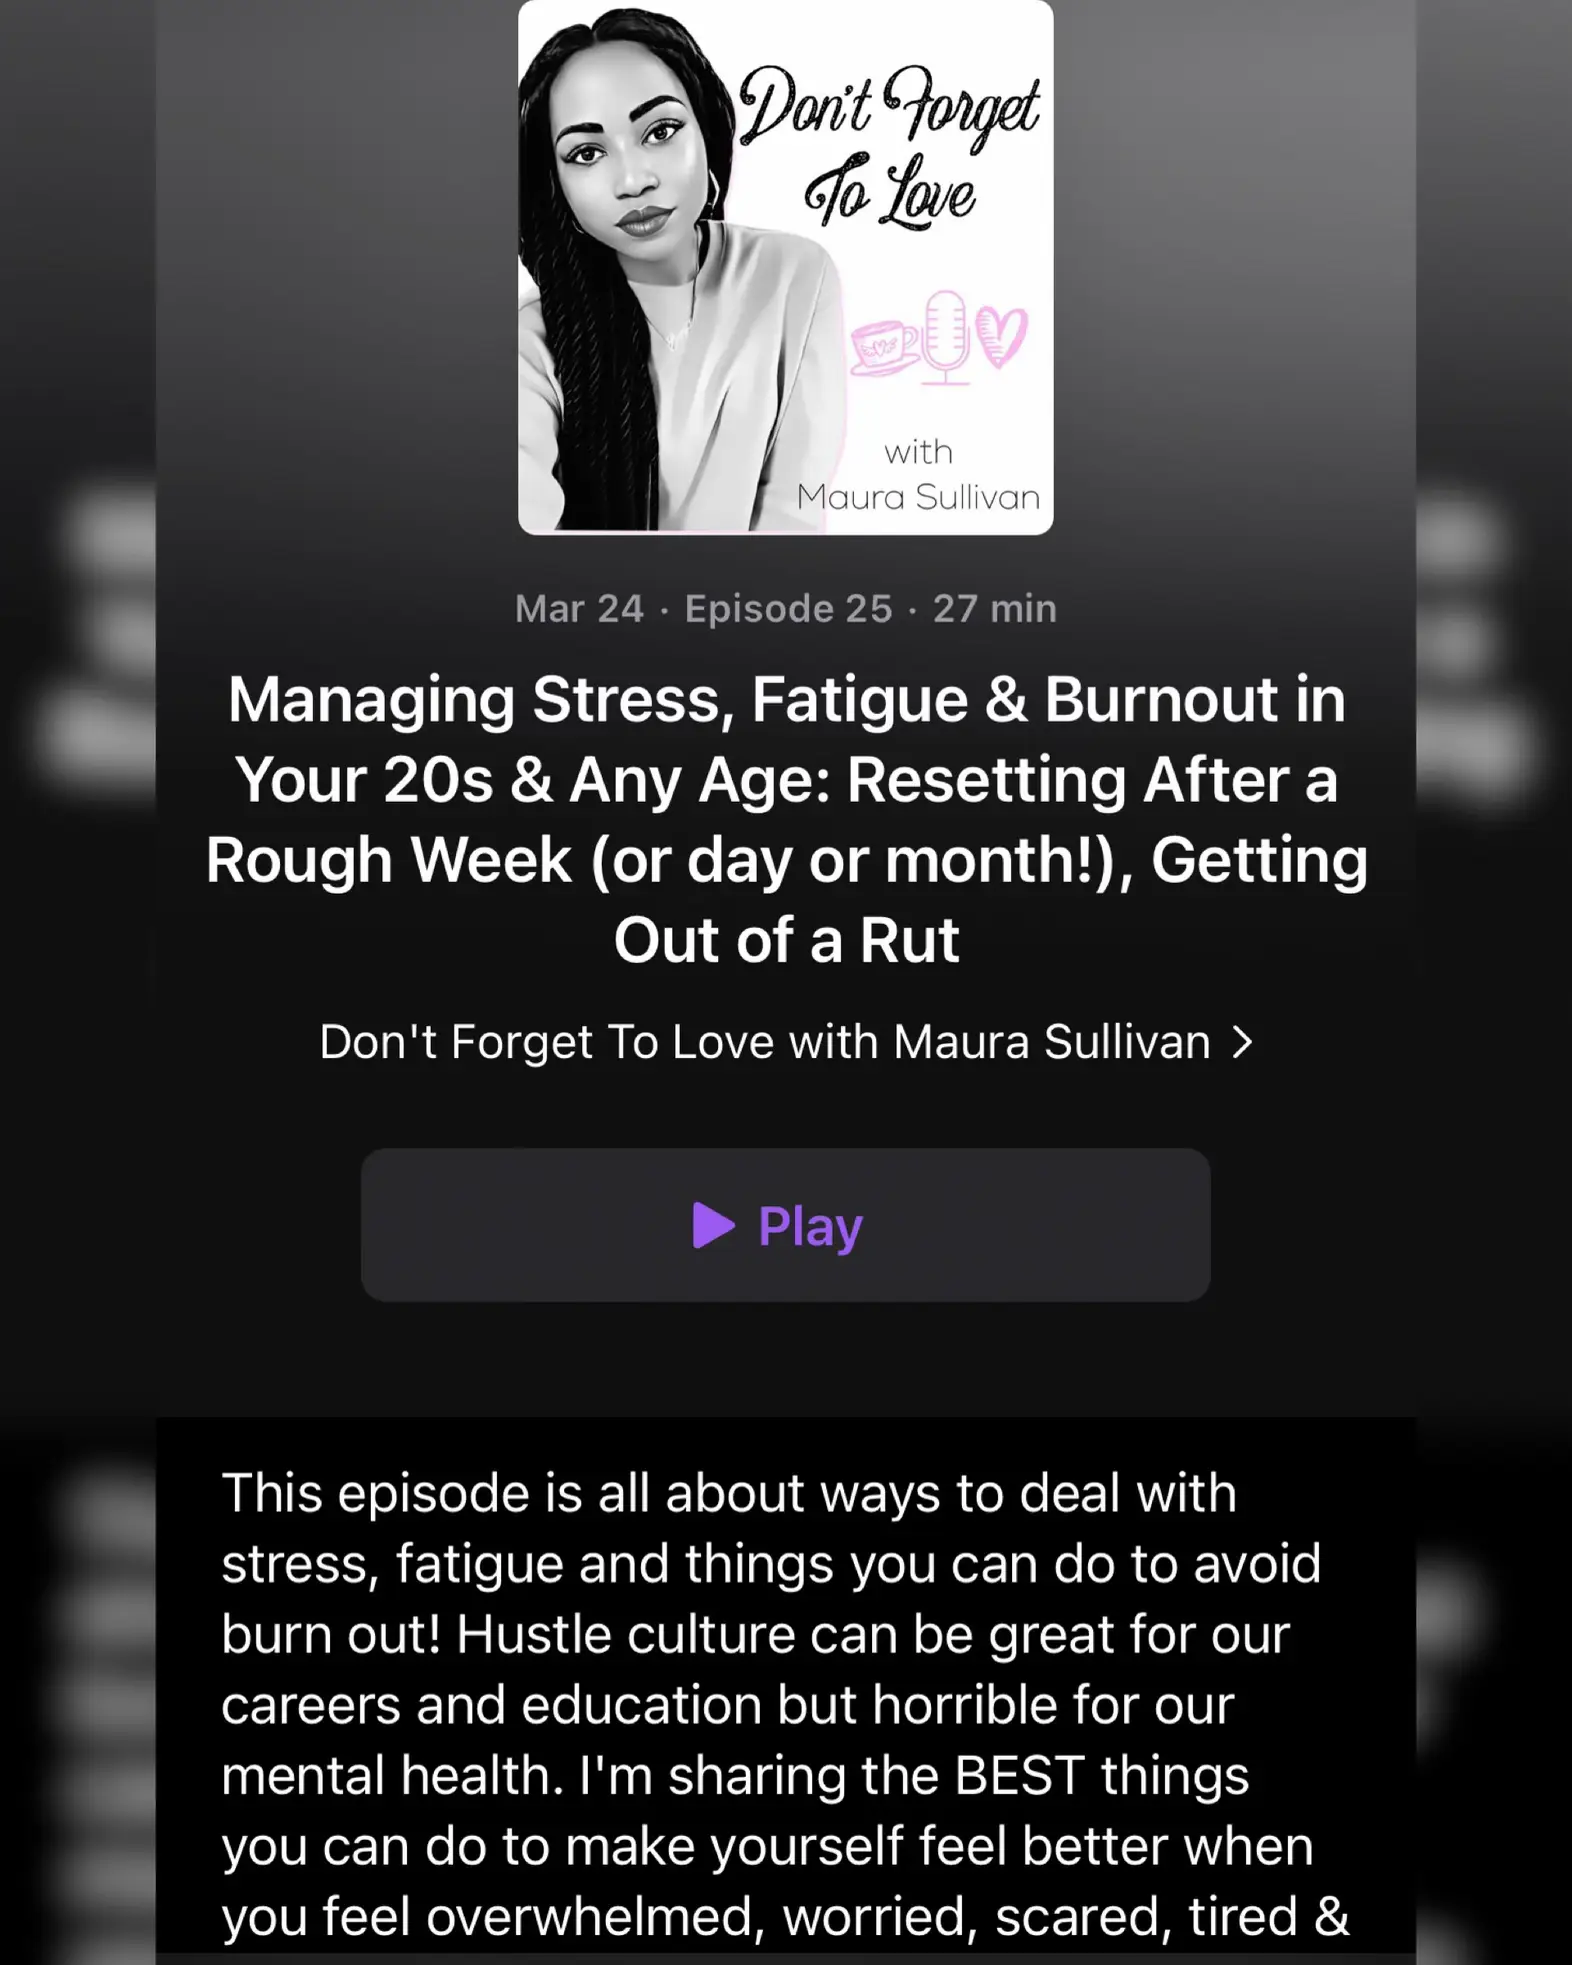 Retro Spectives Year 2: Avoiding the Burnout — Retro Spectives Podcast